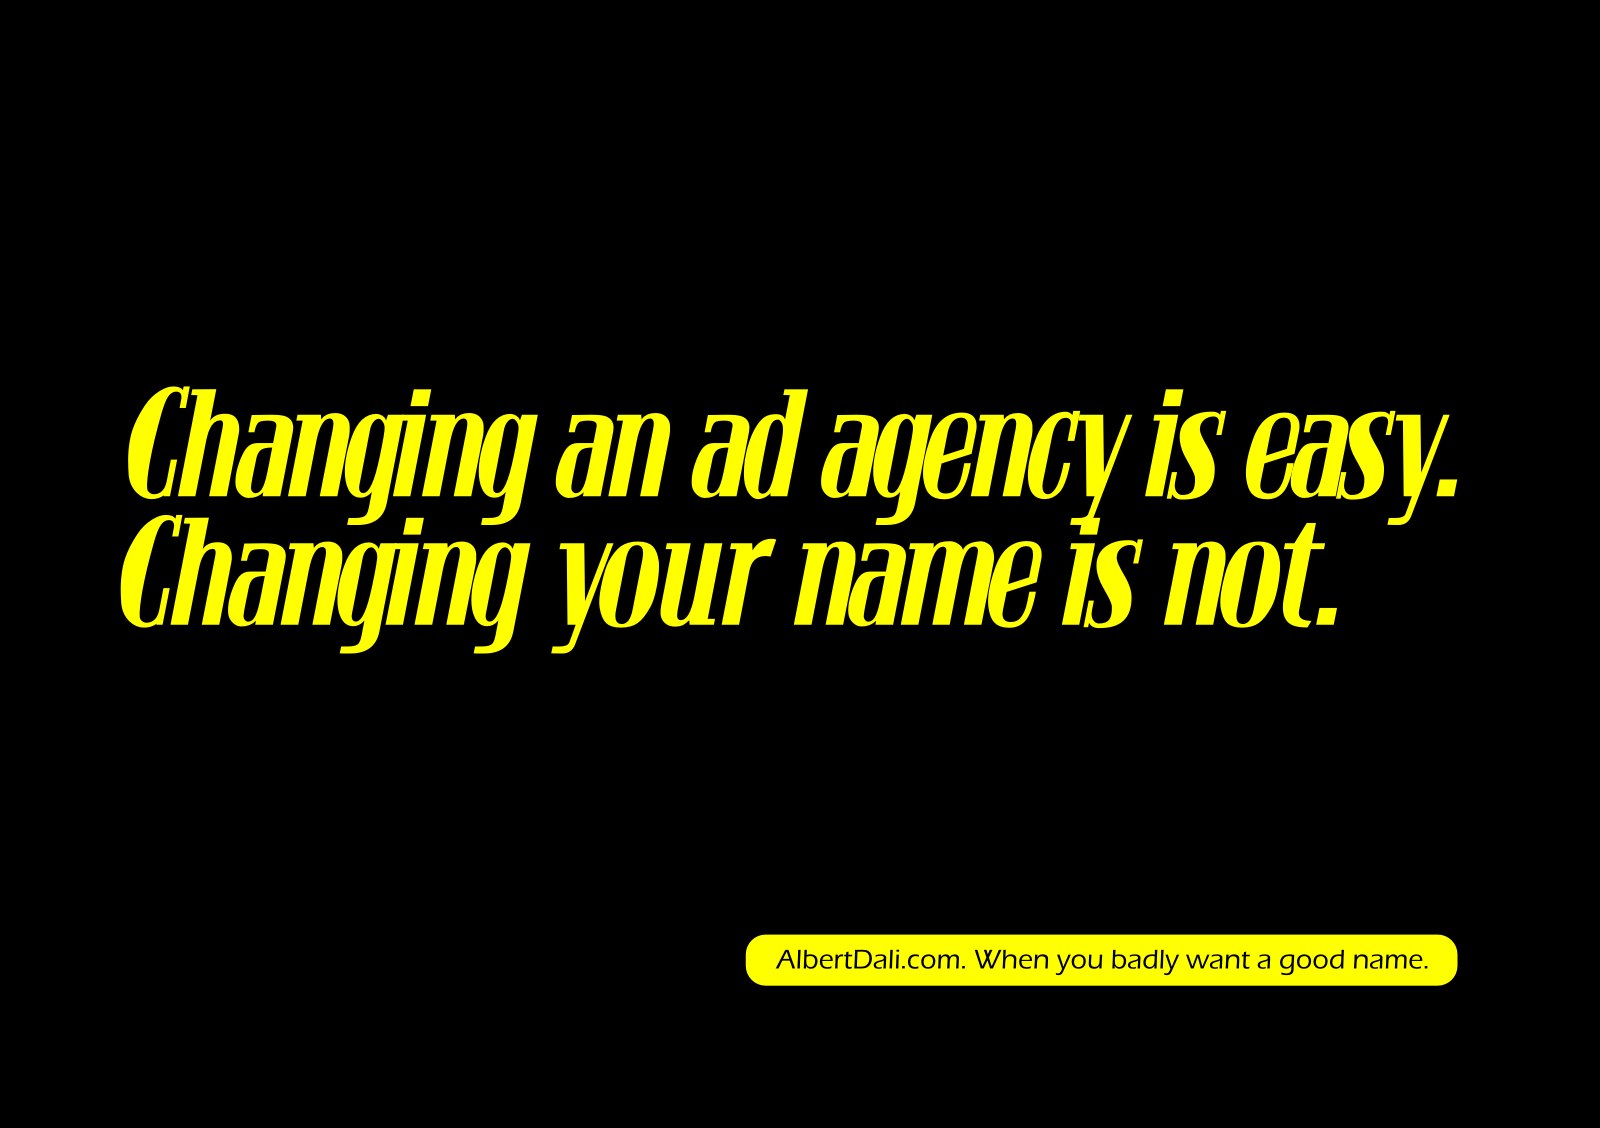 Choosing an ad agency